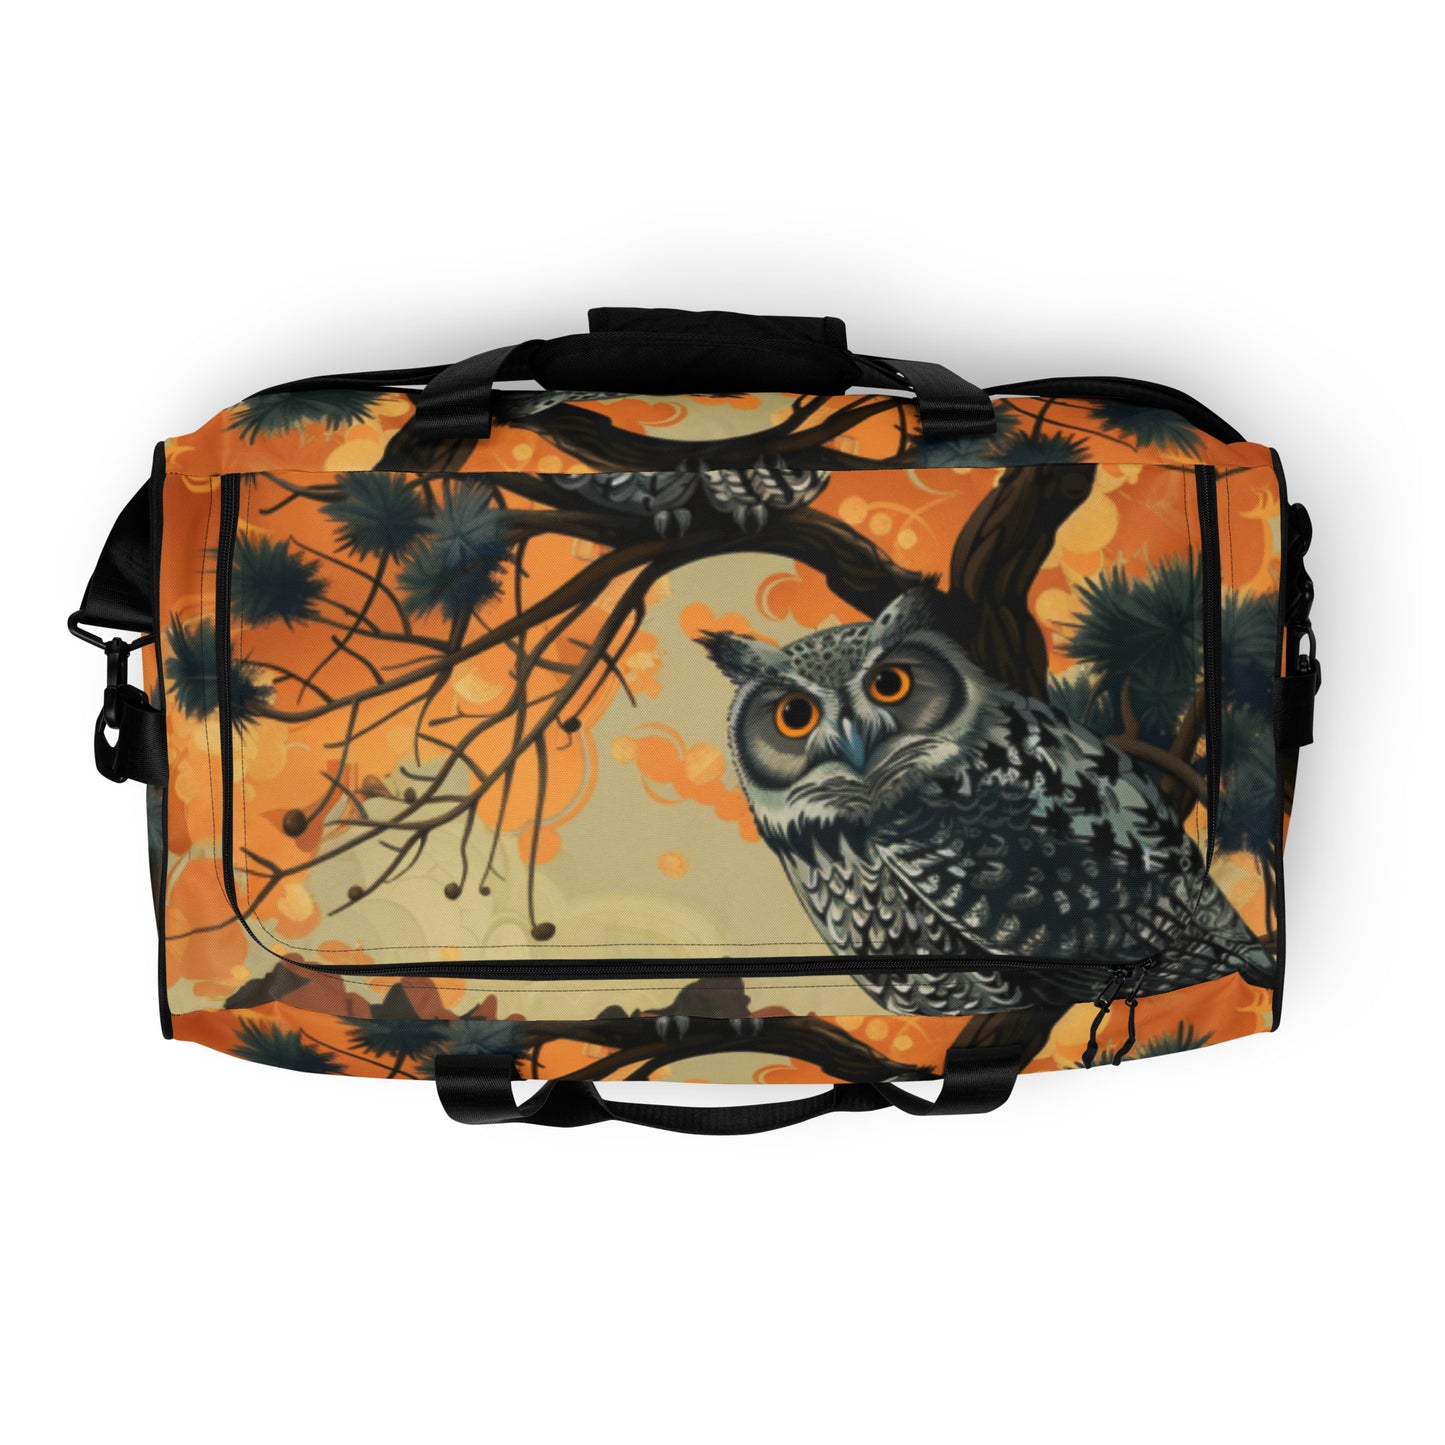 Owl 2 Duffle bag